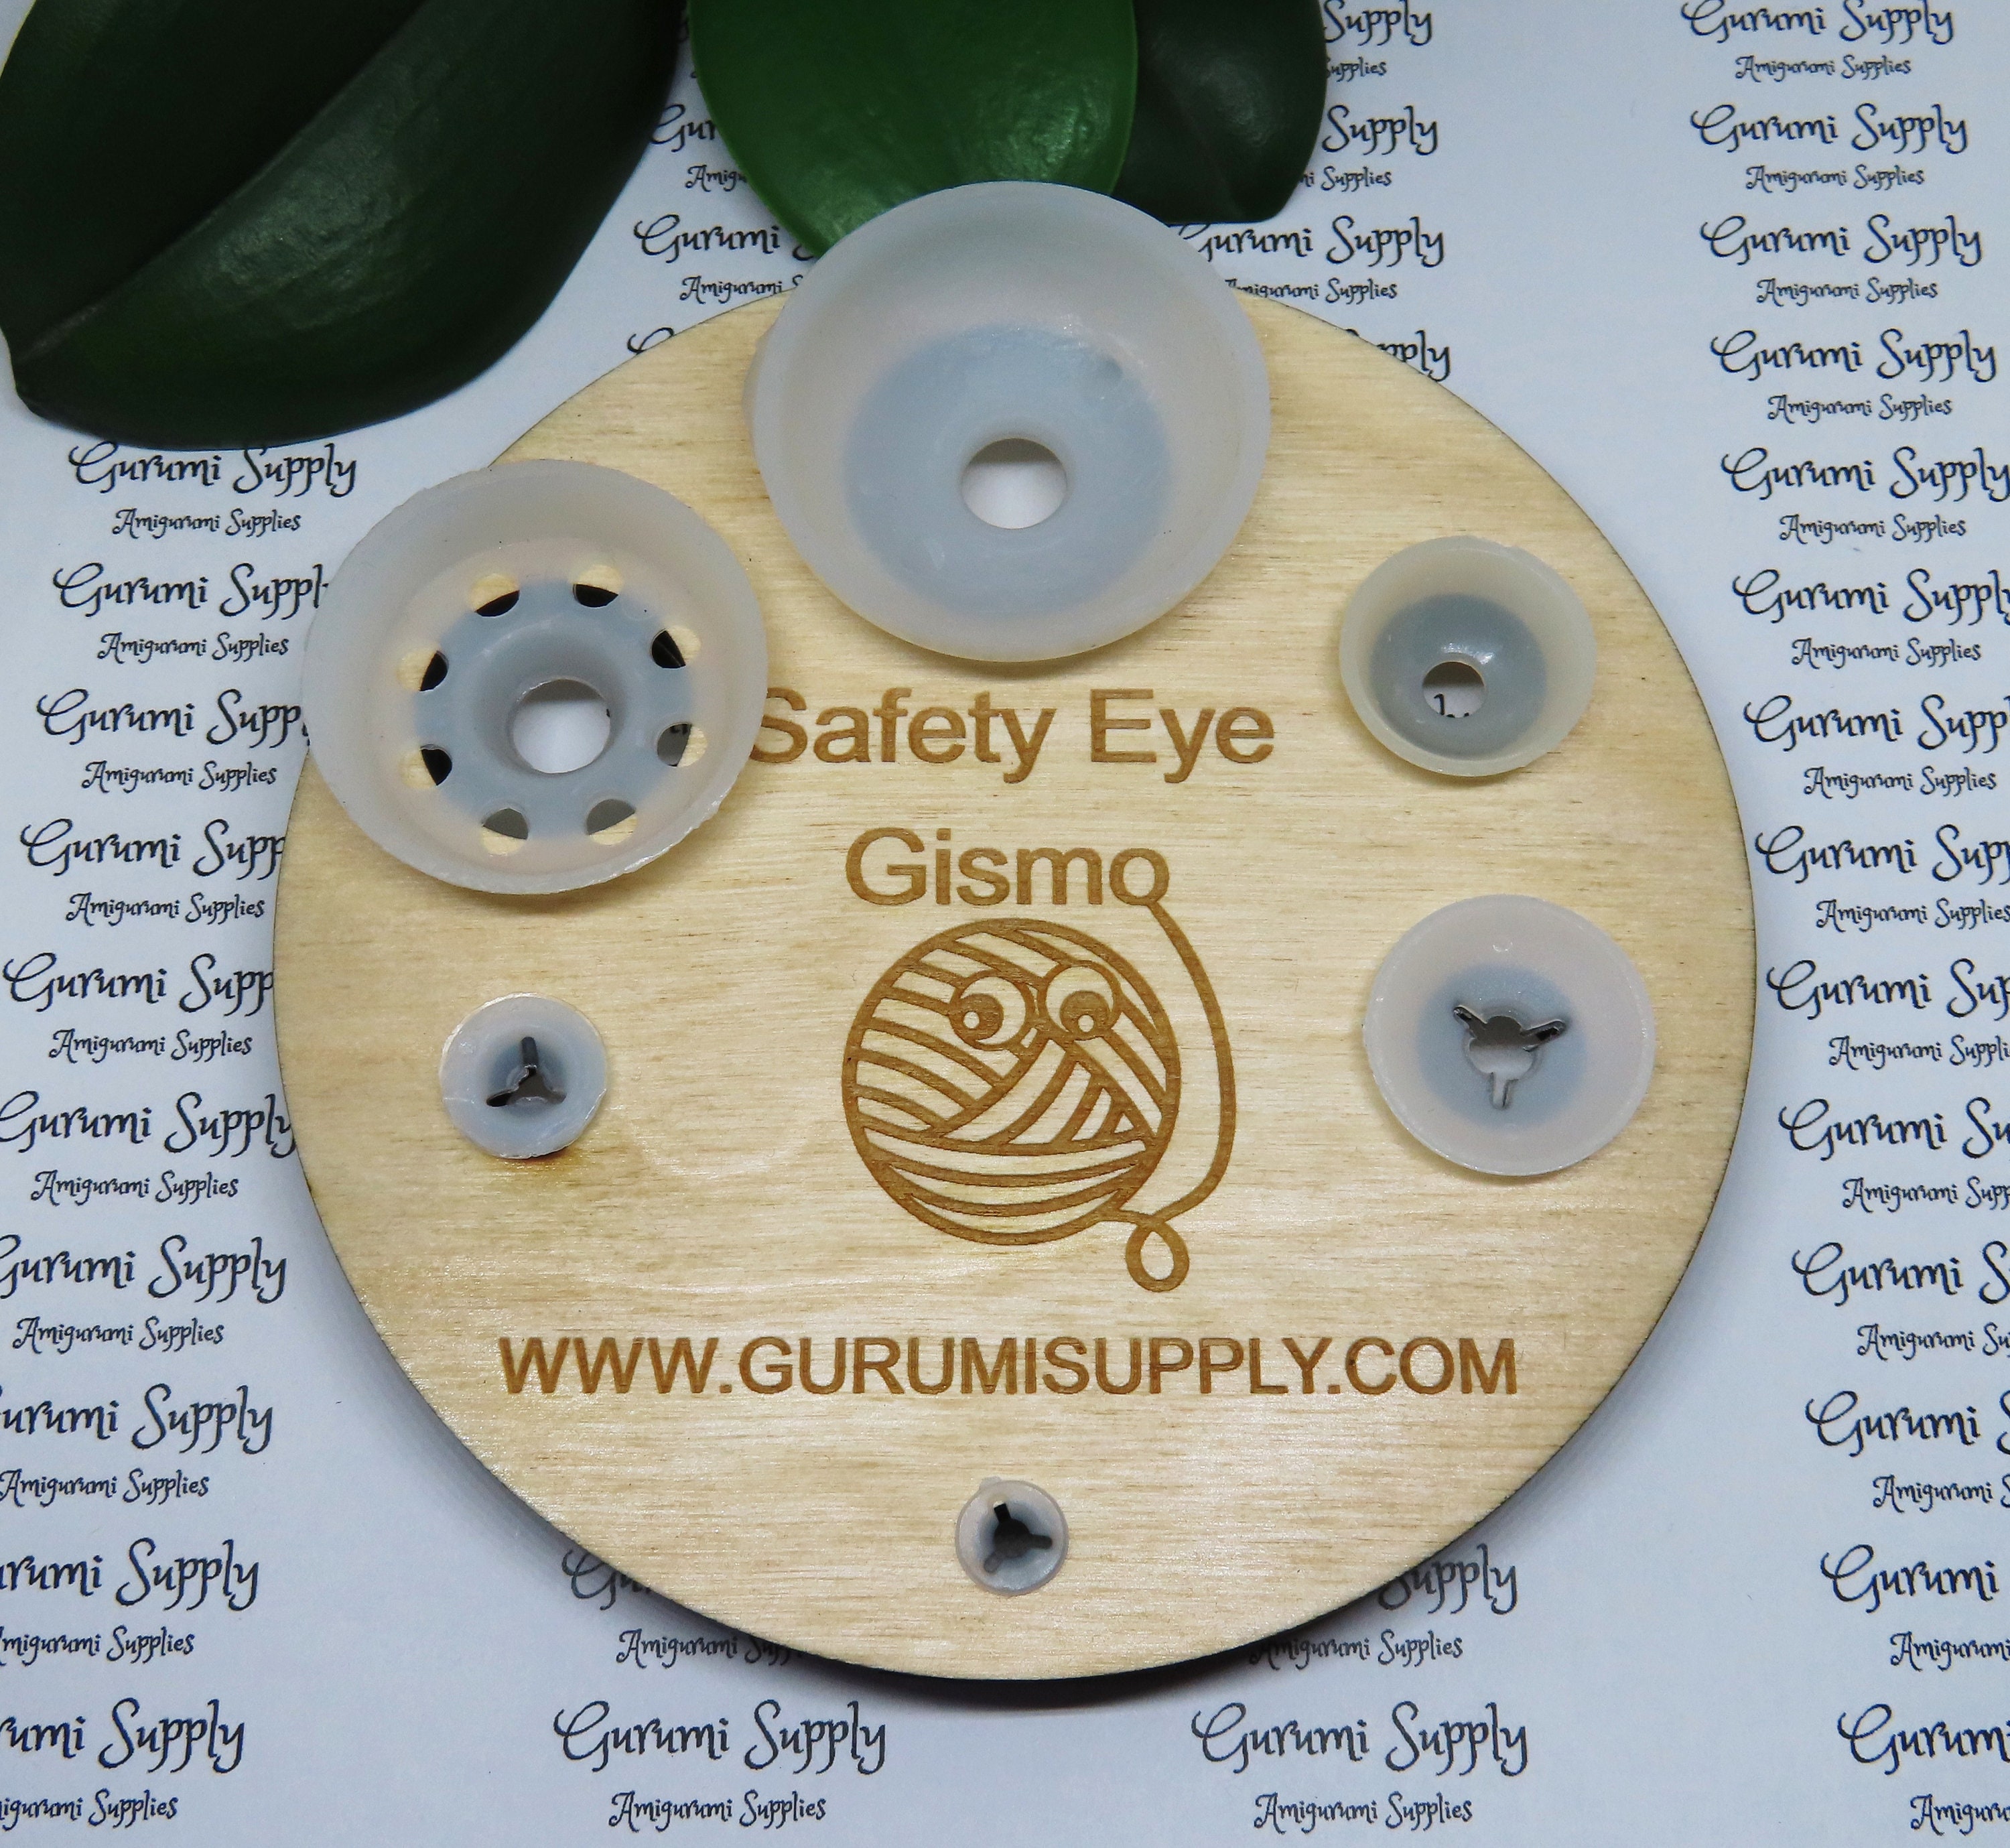 Safety Eye Gismo Petite Size On-the-go Keychain Safety Eye Tool